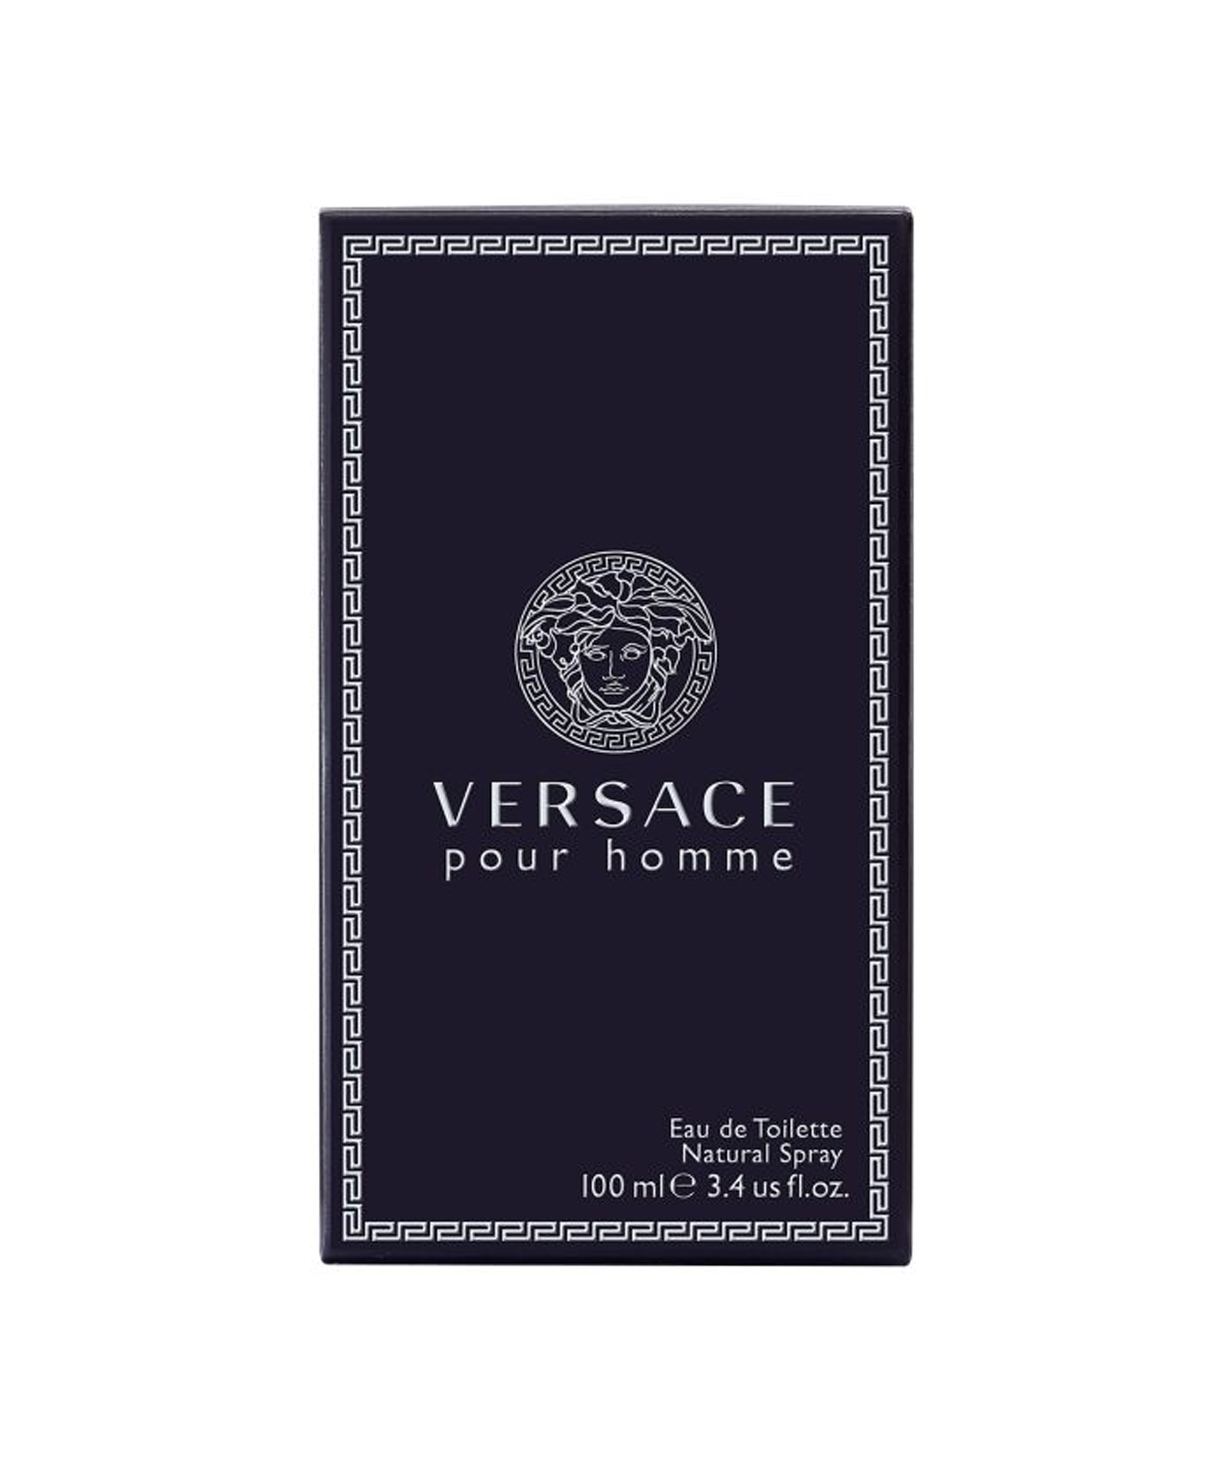 Perfume «Versace» for men, 100 ml